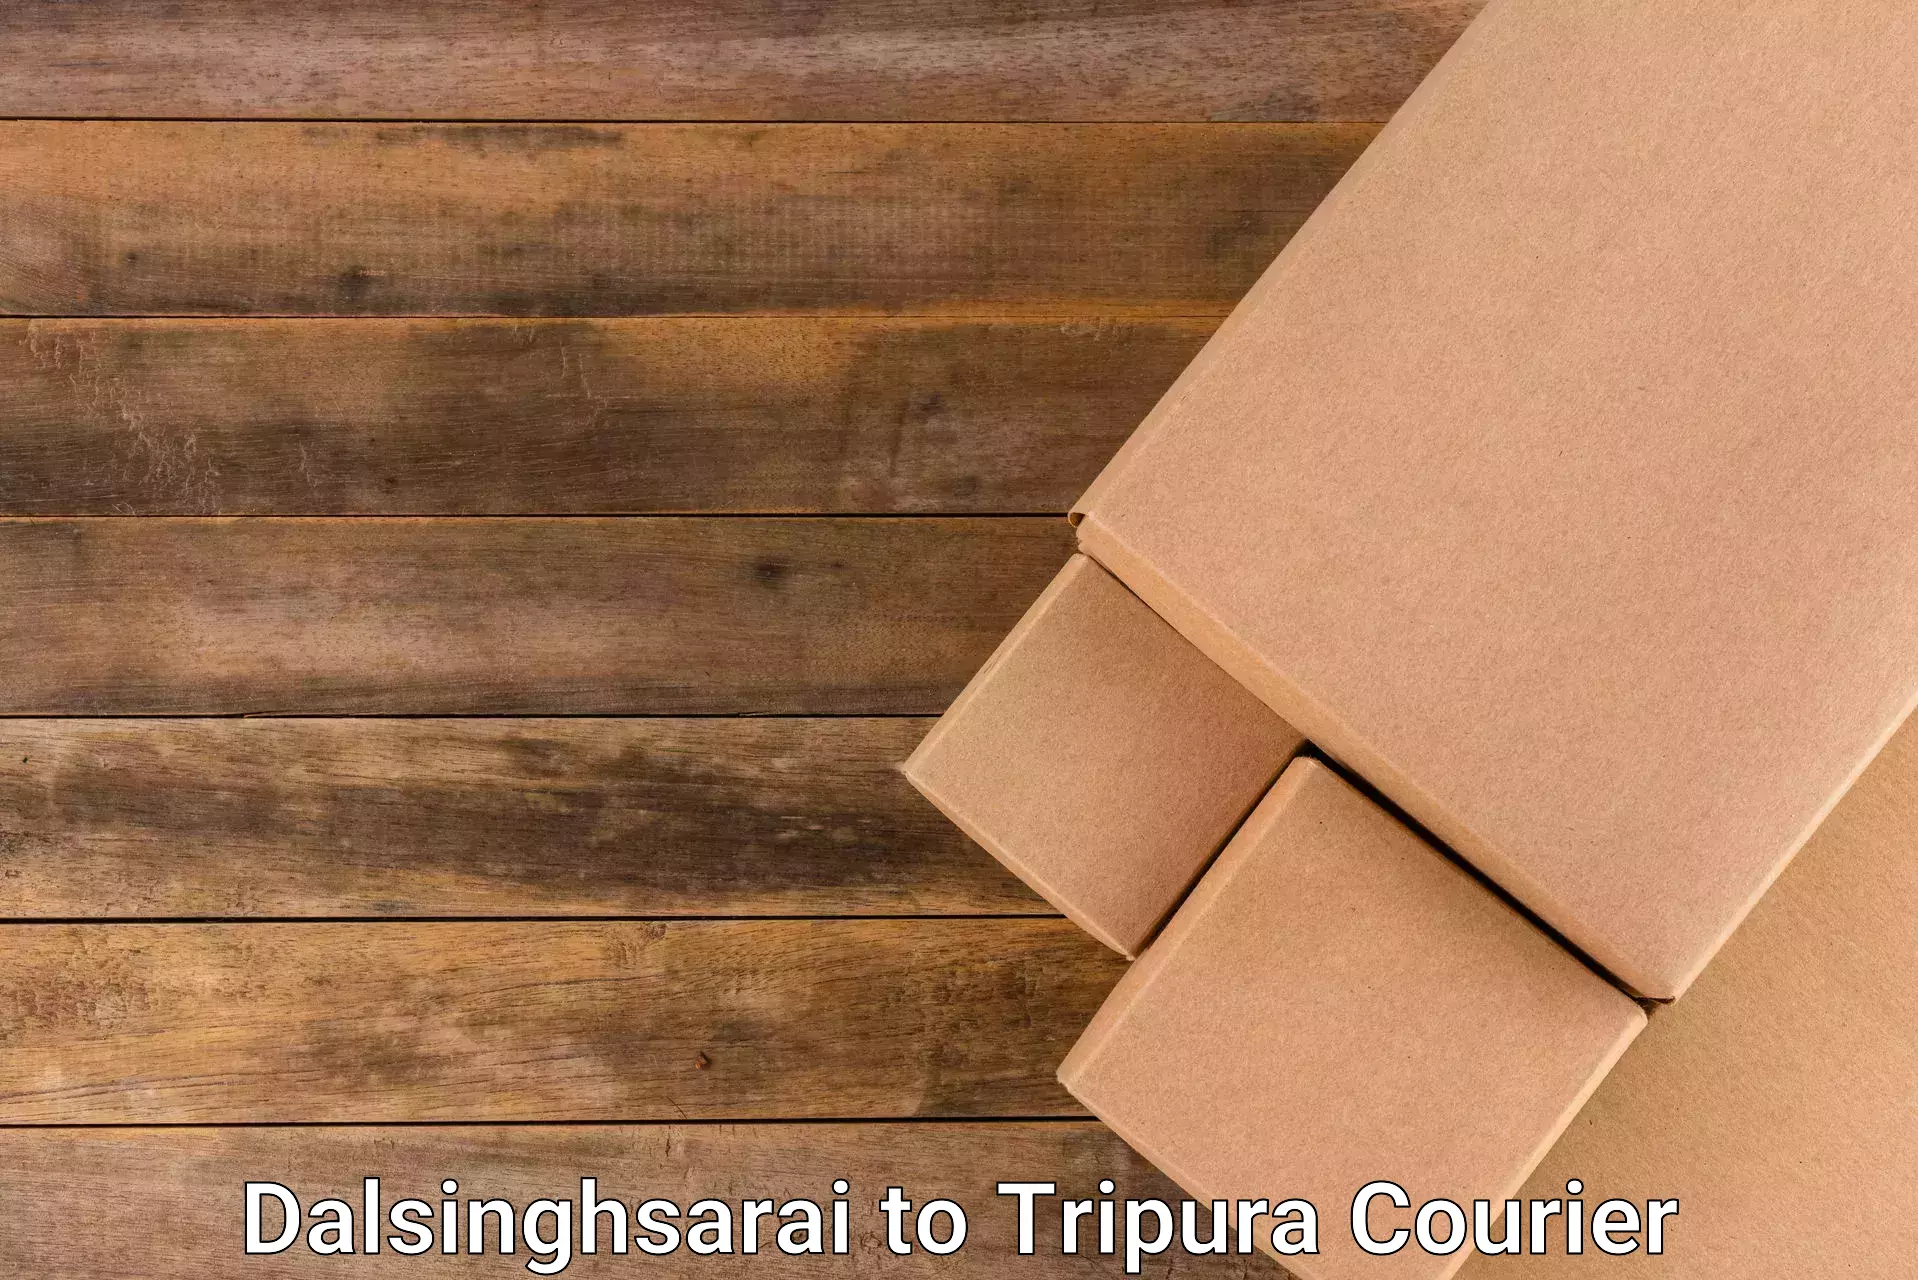 Digital courier platforms Dalsinghsarai to Udaipur Tripura